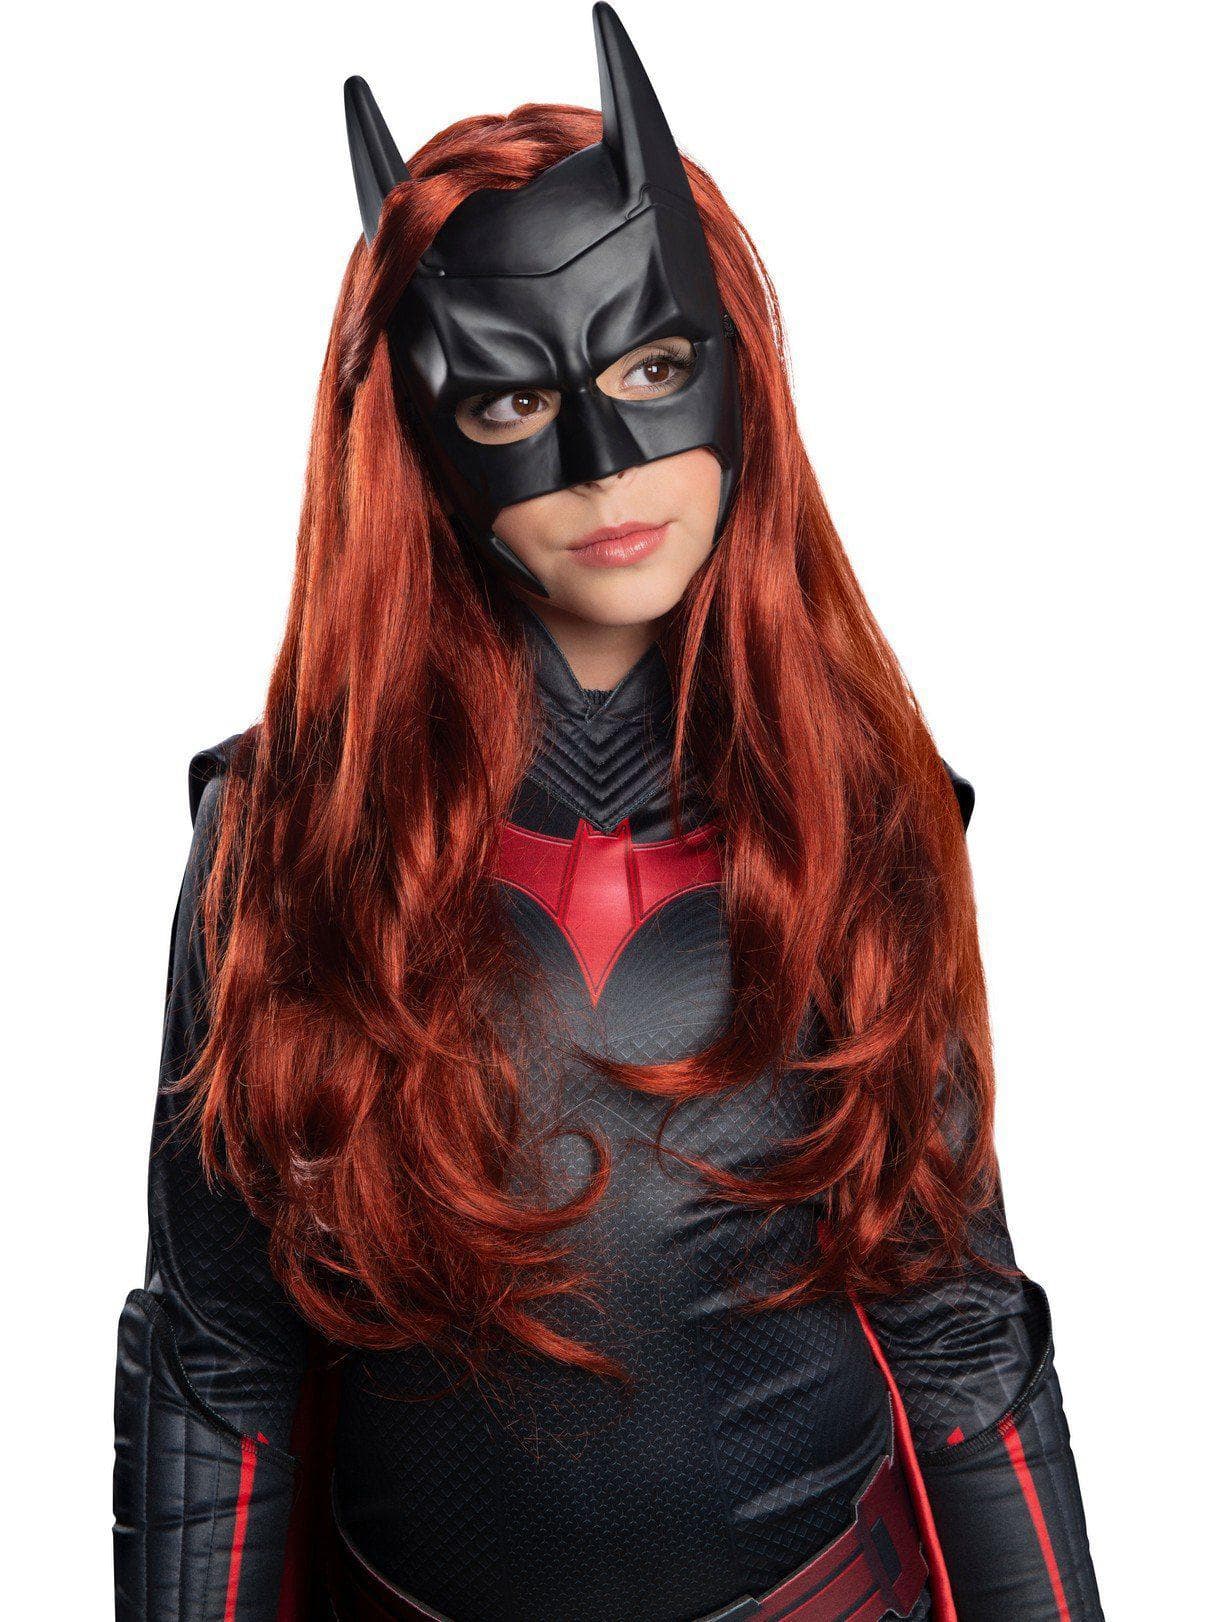 Girls DC Comics Batwoman Mask and Wig Set - costumes.com